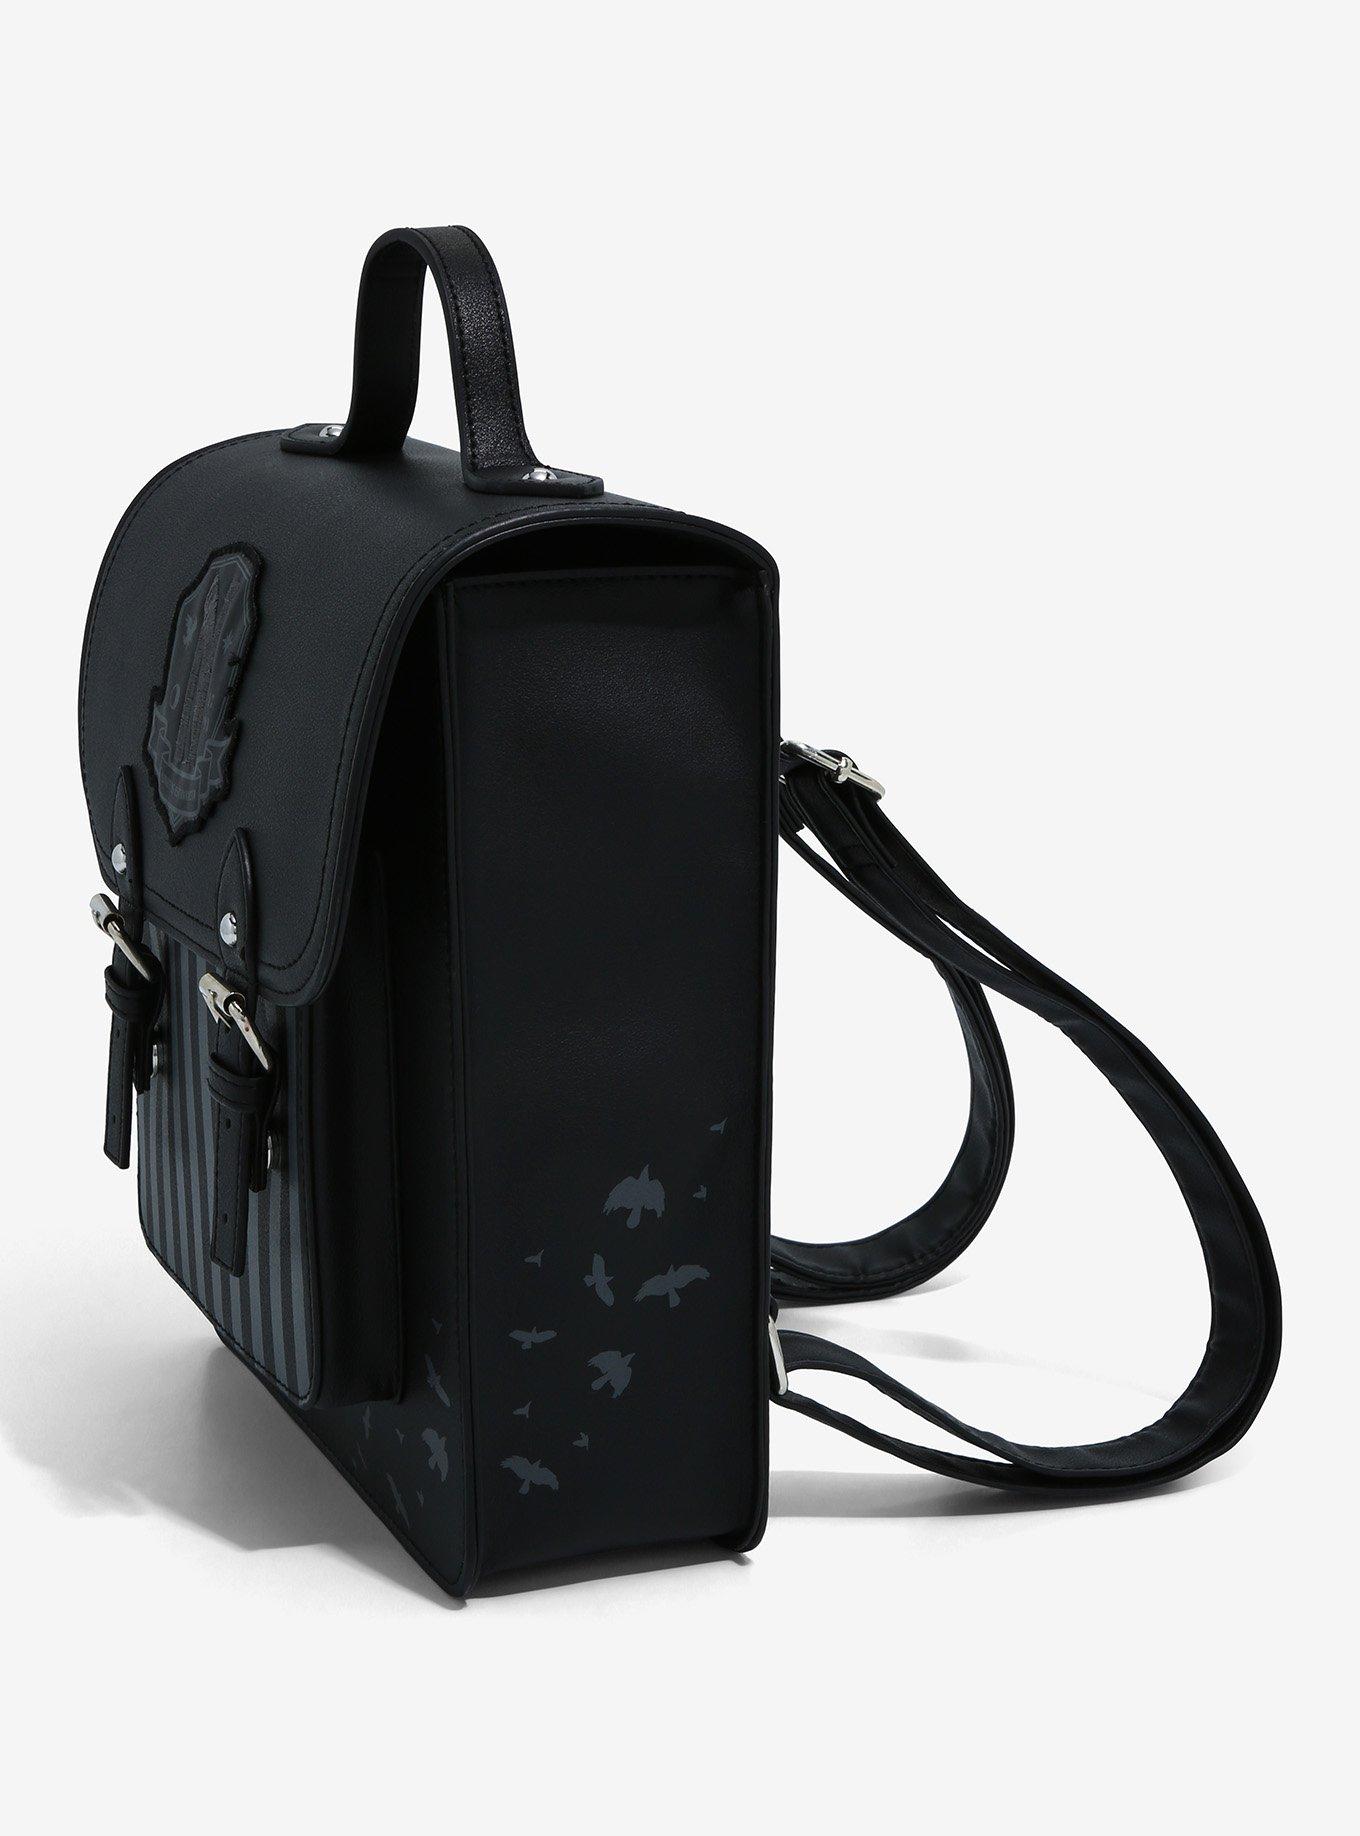 Loungefly Star Wars Fennec Shand Mini Backpack Double Shoulder Strap Book  of Boba, Black, Mini, Mini Backpack : : Fashion